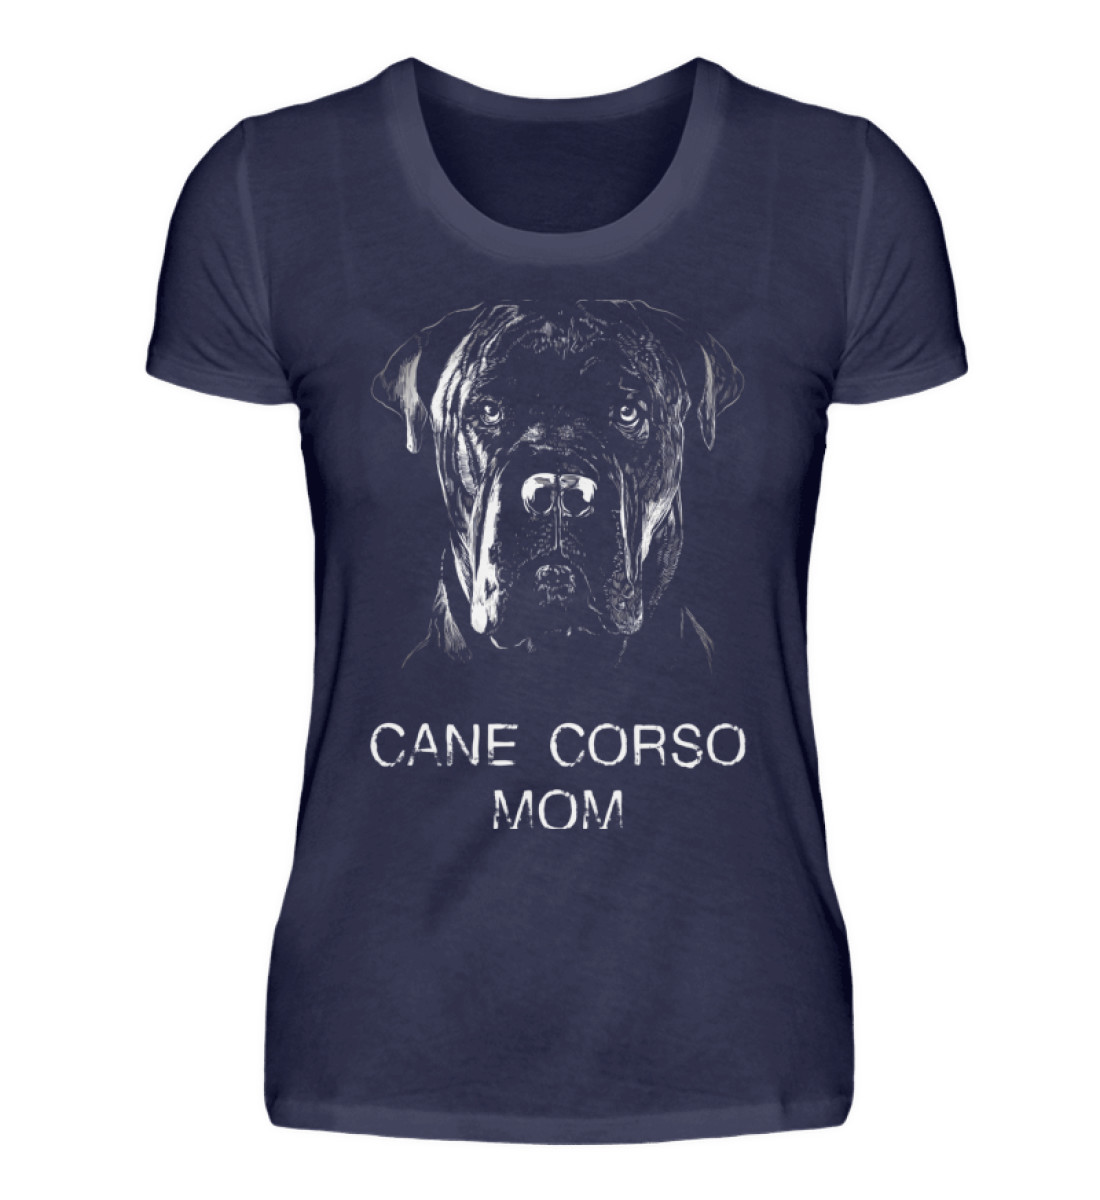 Cane Corso Mom - Shirt für Hunde-Frauchen - Damenshirt-198